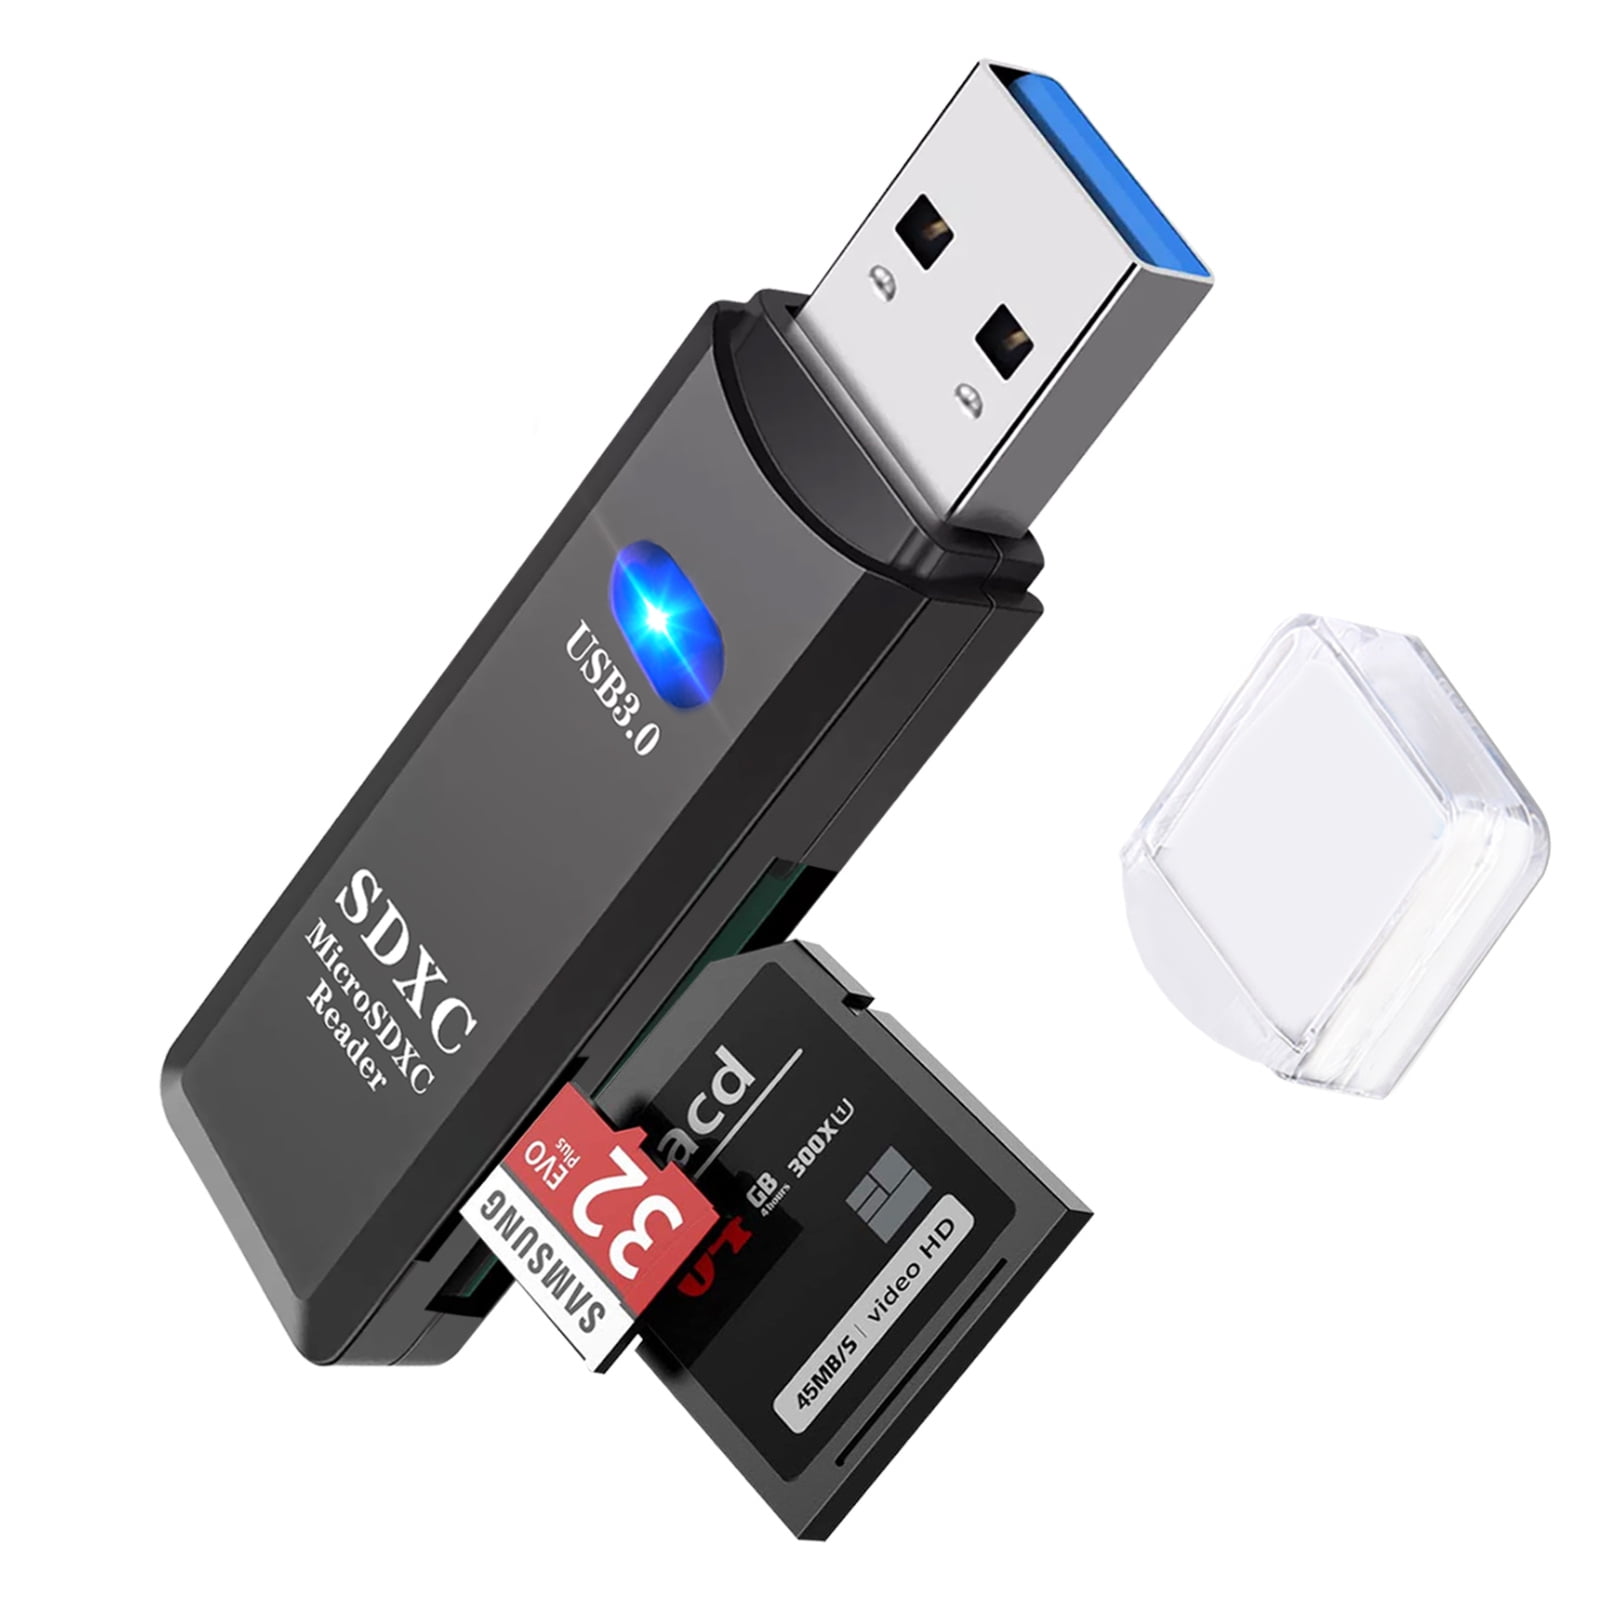 TSV USB 3.0 Portable Card Reader for SD, SDHC, SDXC, MicroSD, MicroSDHC,  MicroSDXC, All-in-One Design - USB 3.0 Micro SD and SD Card Reader fits for